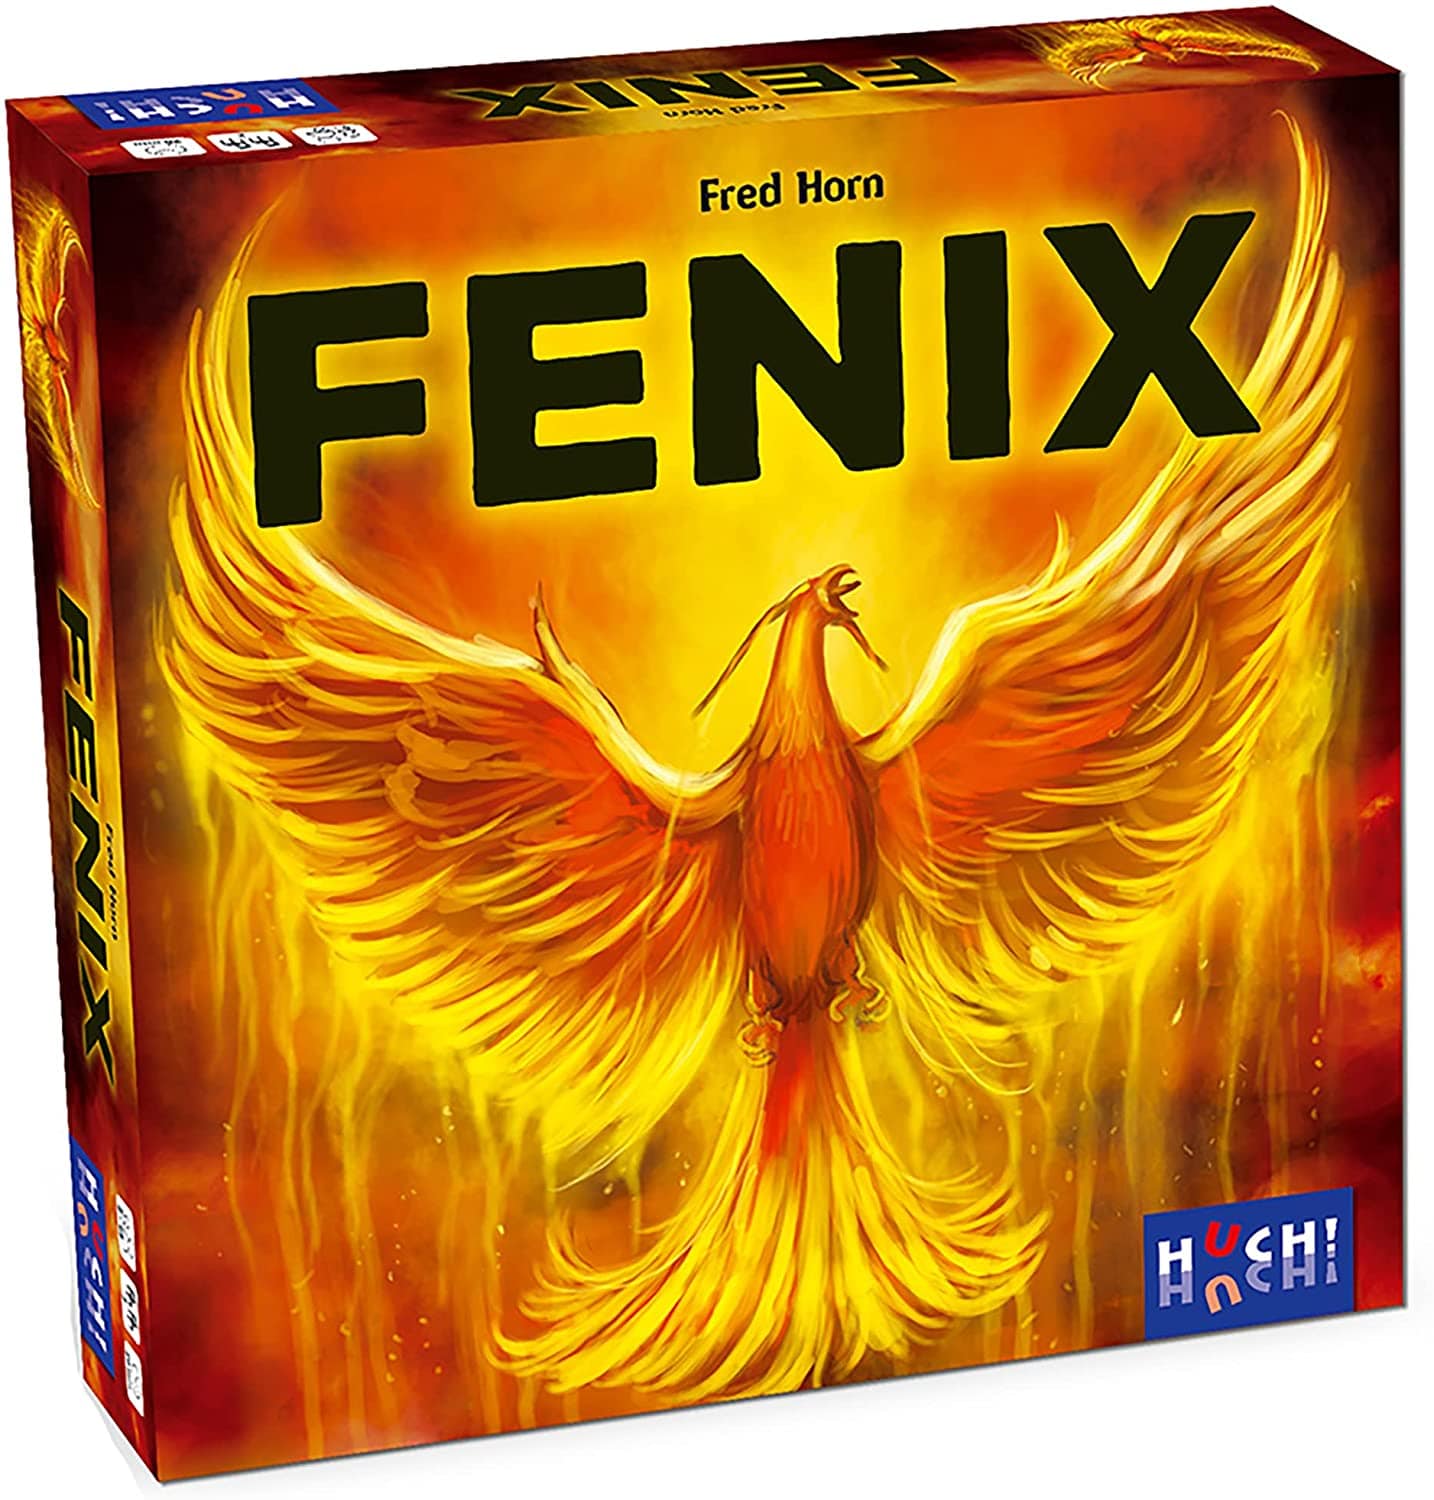 Fenix - Third Eye